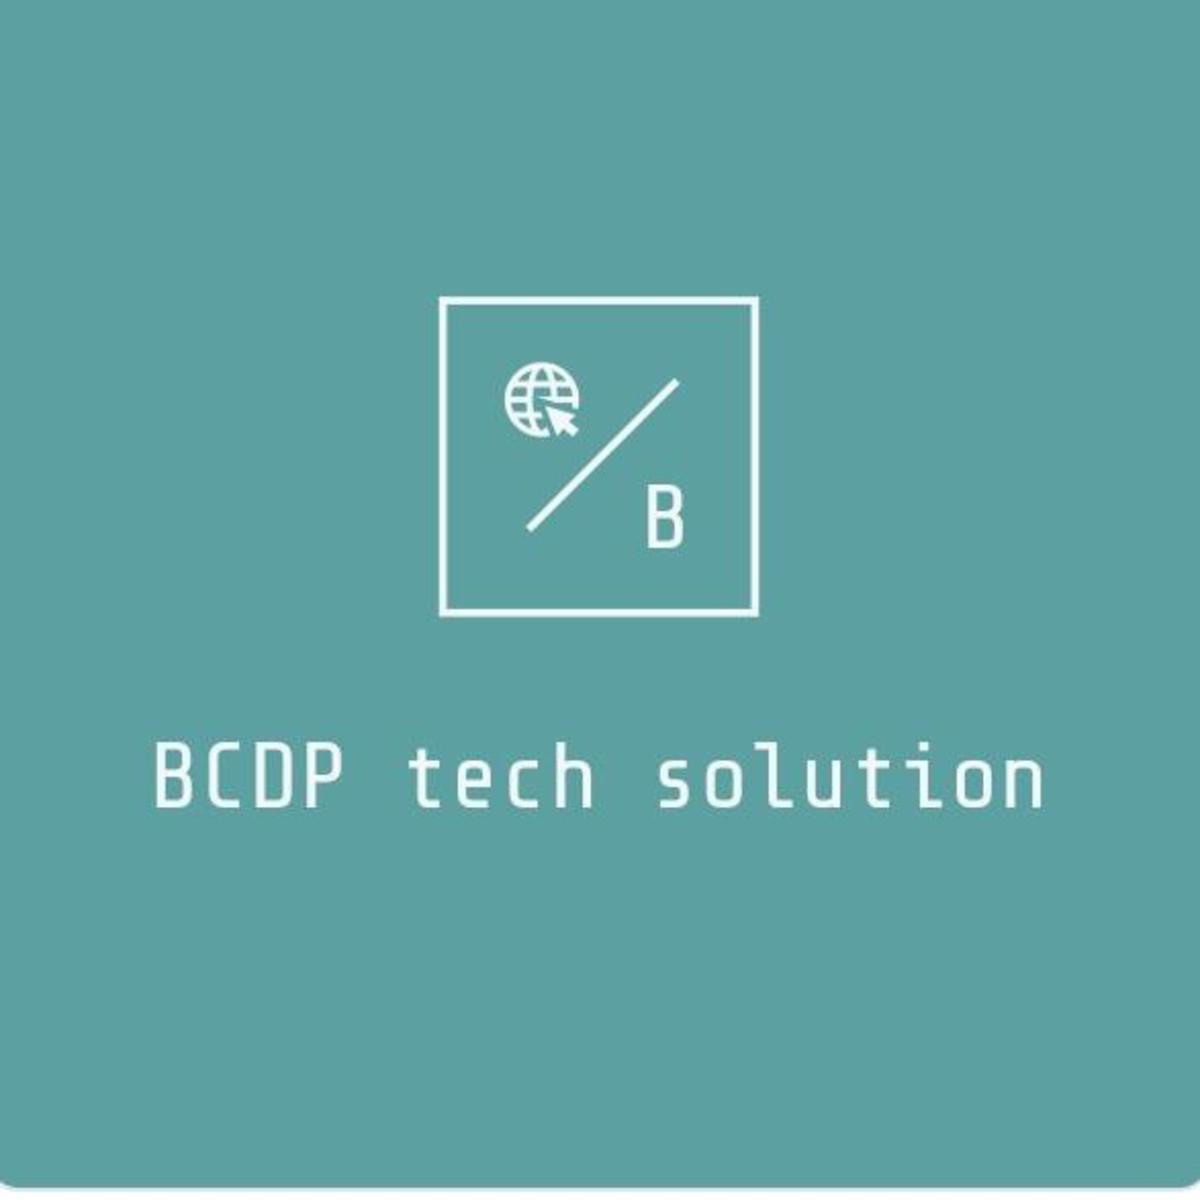 BCDP tech solution